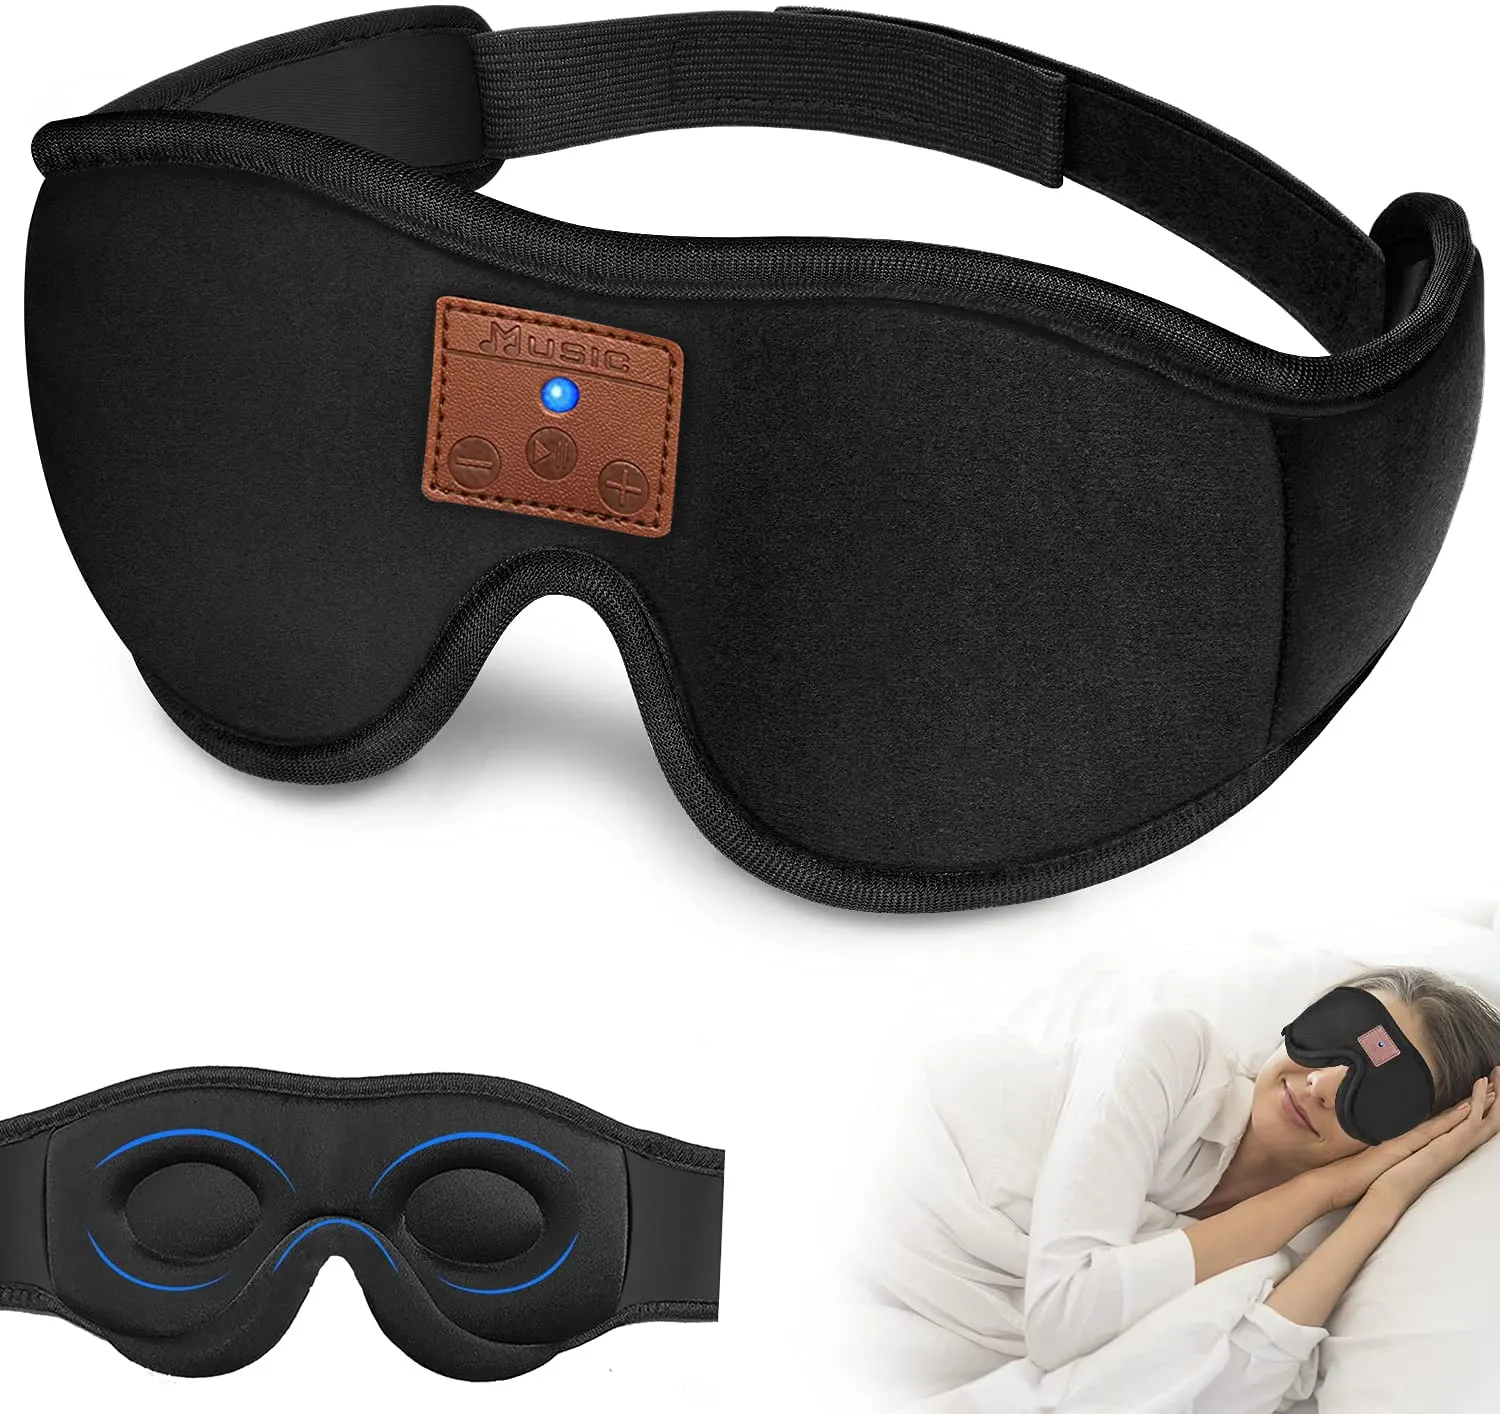 Tooth Wireless Sleepband Sleeping Mask Eye Mask Speaker LED Tws Bluetooth Headband with Sound Headphone 33dmusic Sleepmask Blue